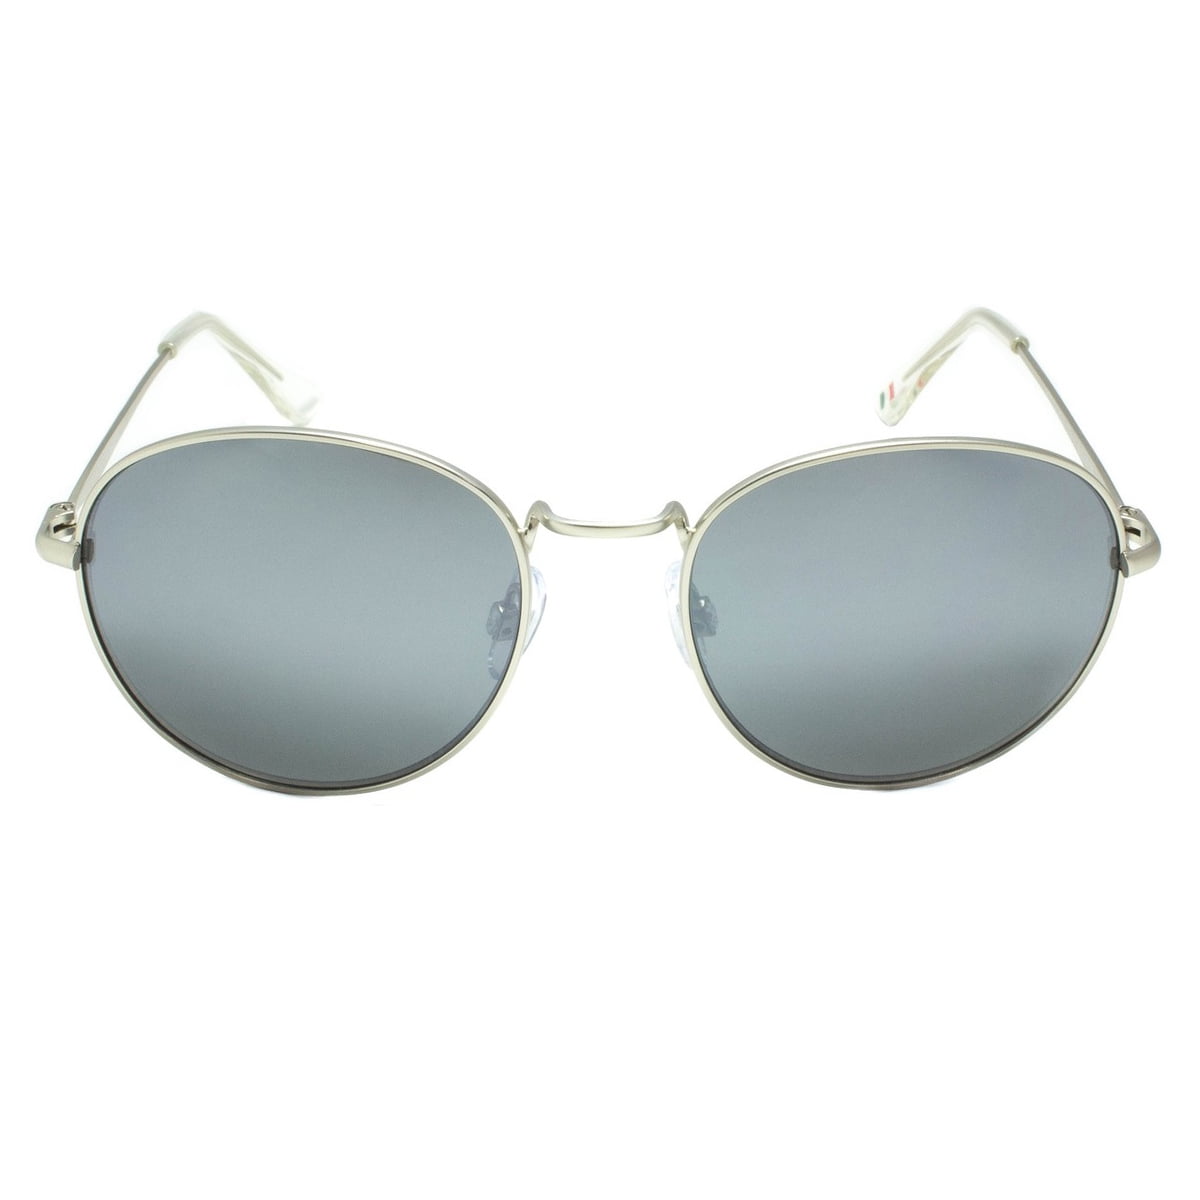 Vintage Mens Sunglasses Round Metal Frame Blue Shades Eye Wear Retro ...